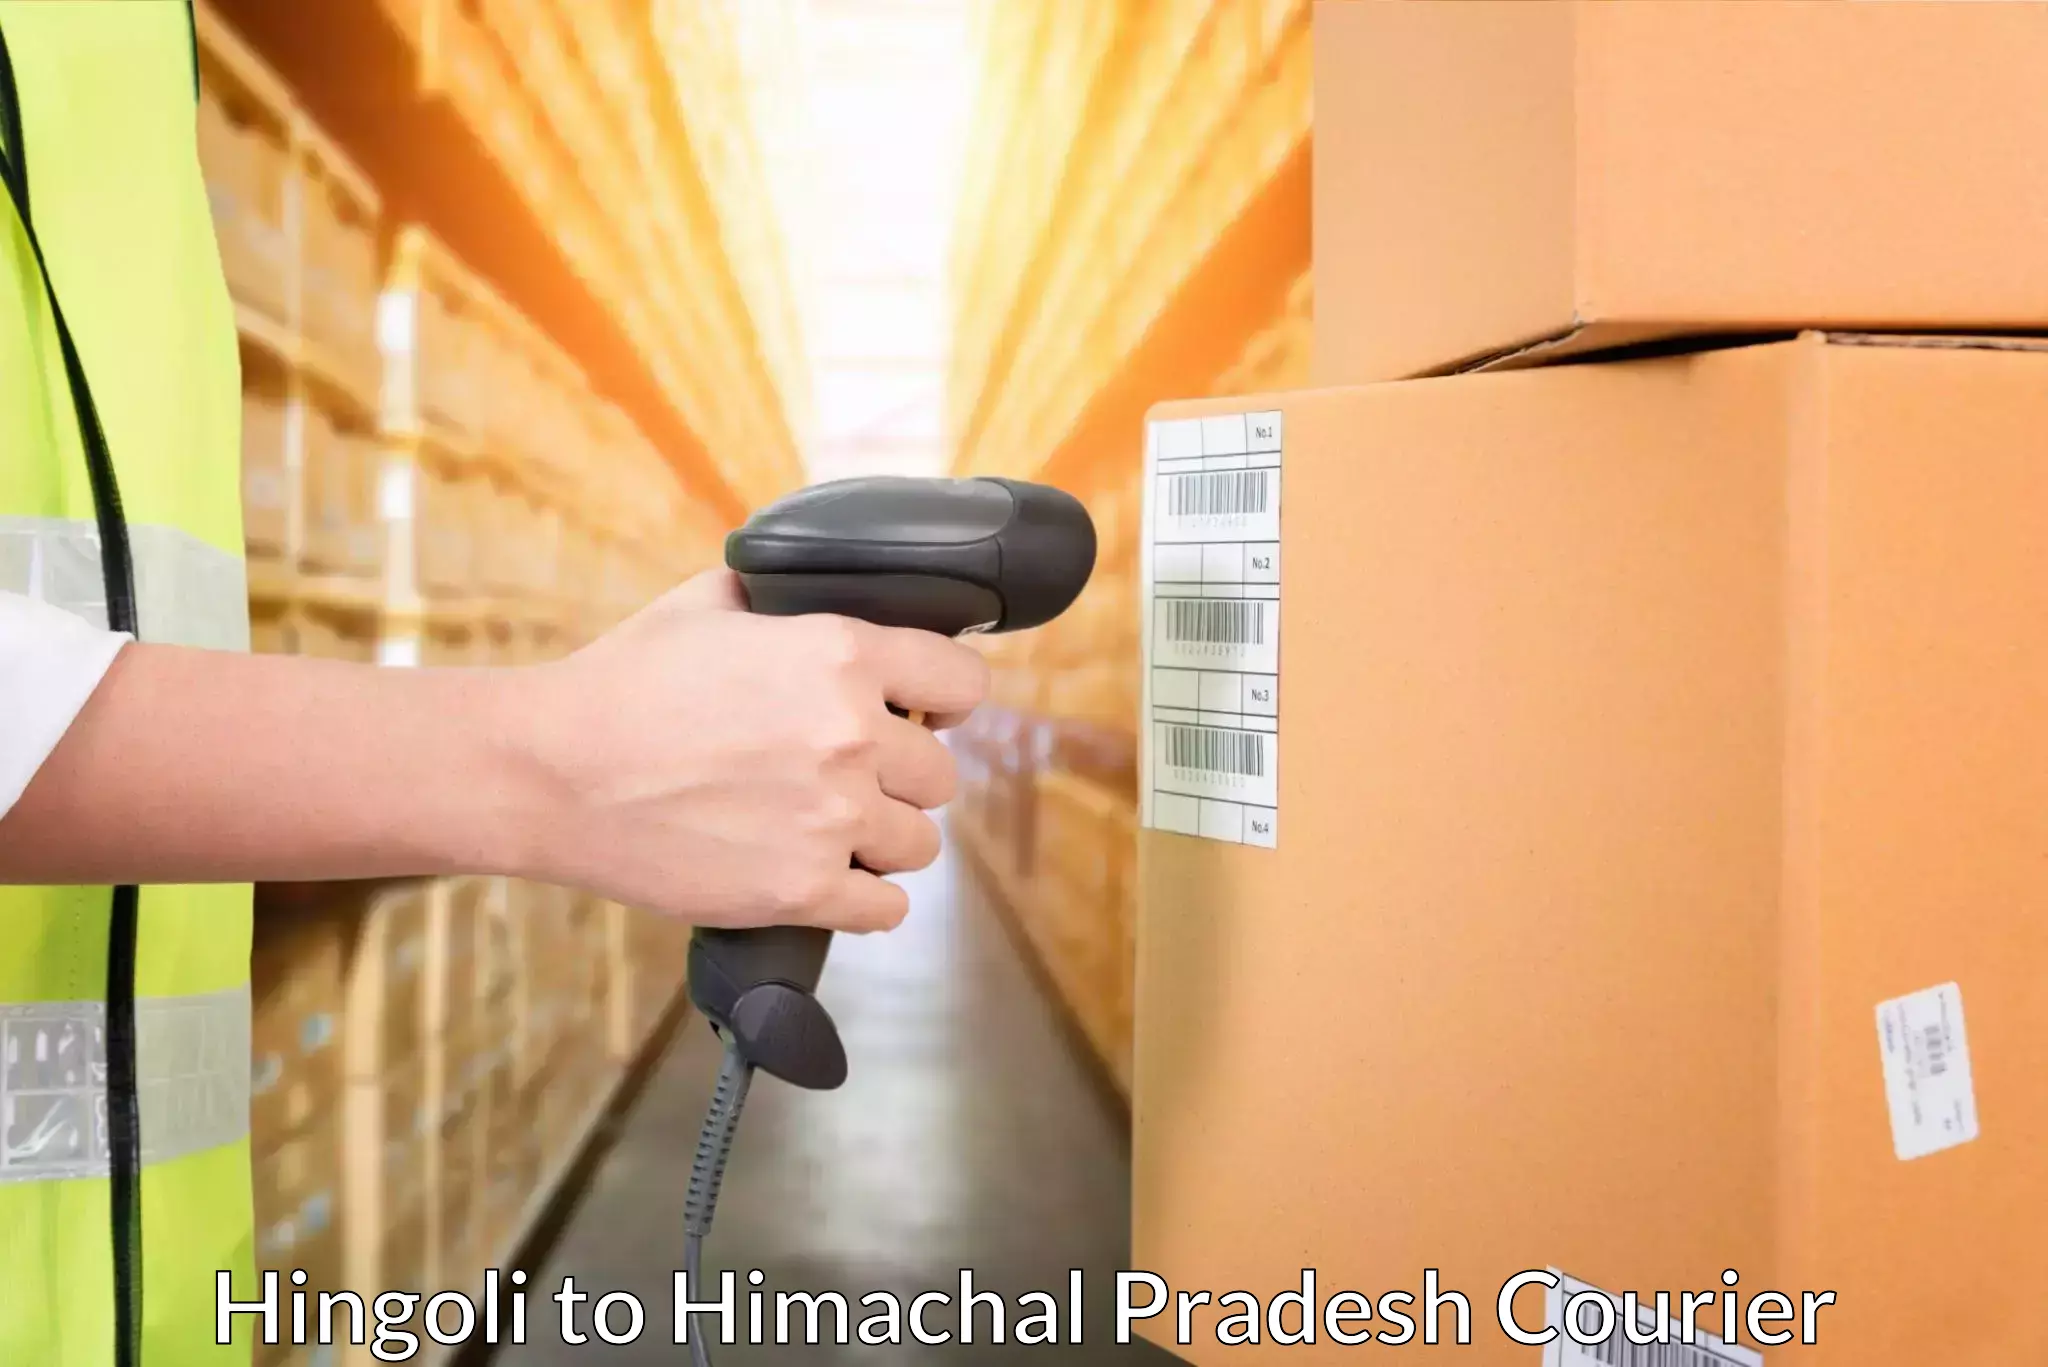 Courier service comparison Hingoli to Joginder Nagar